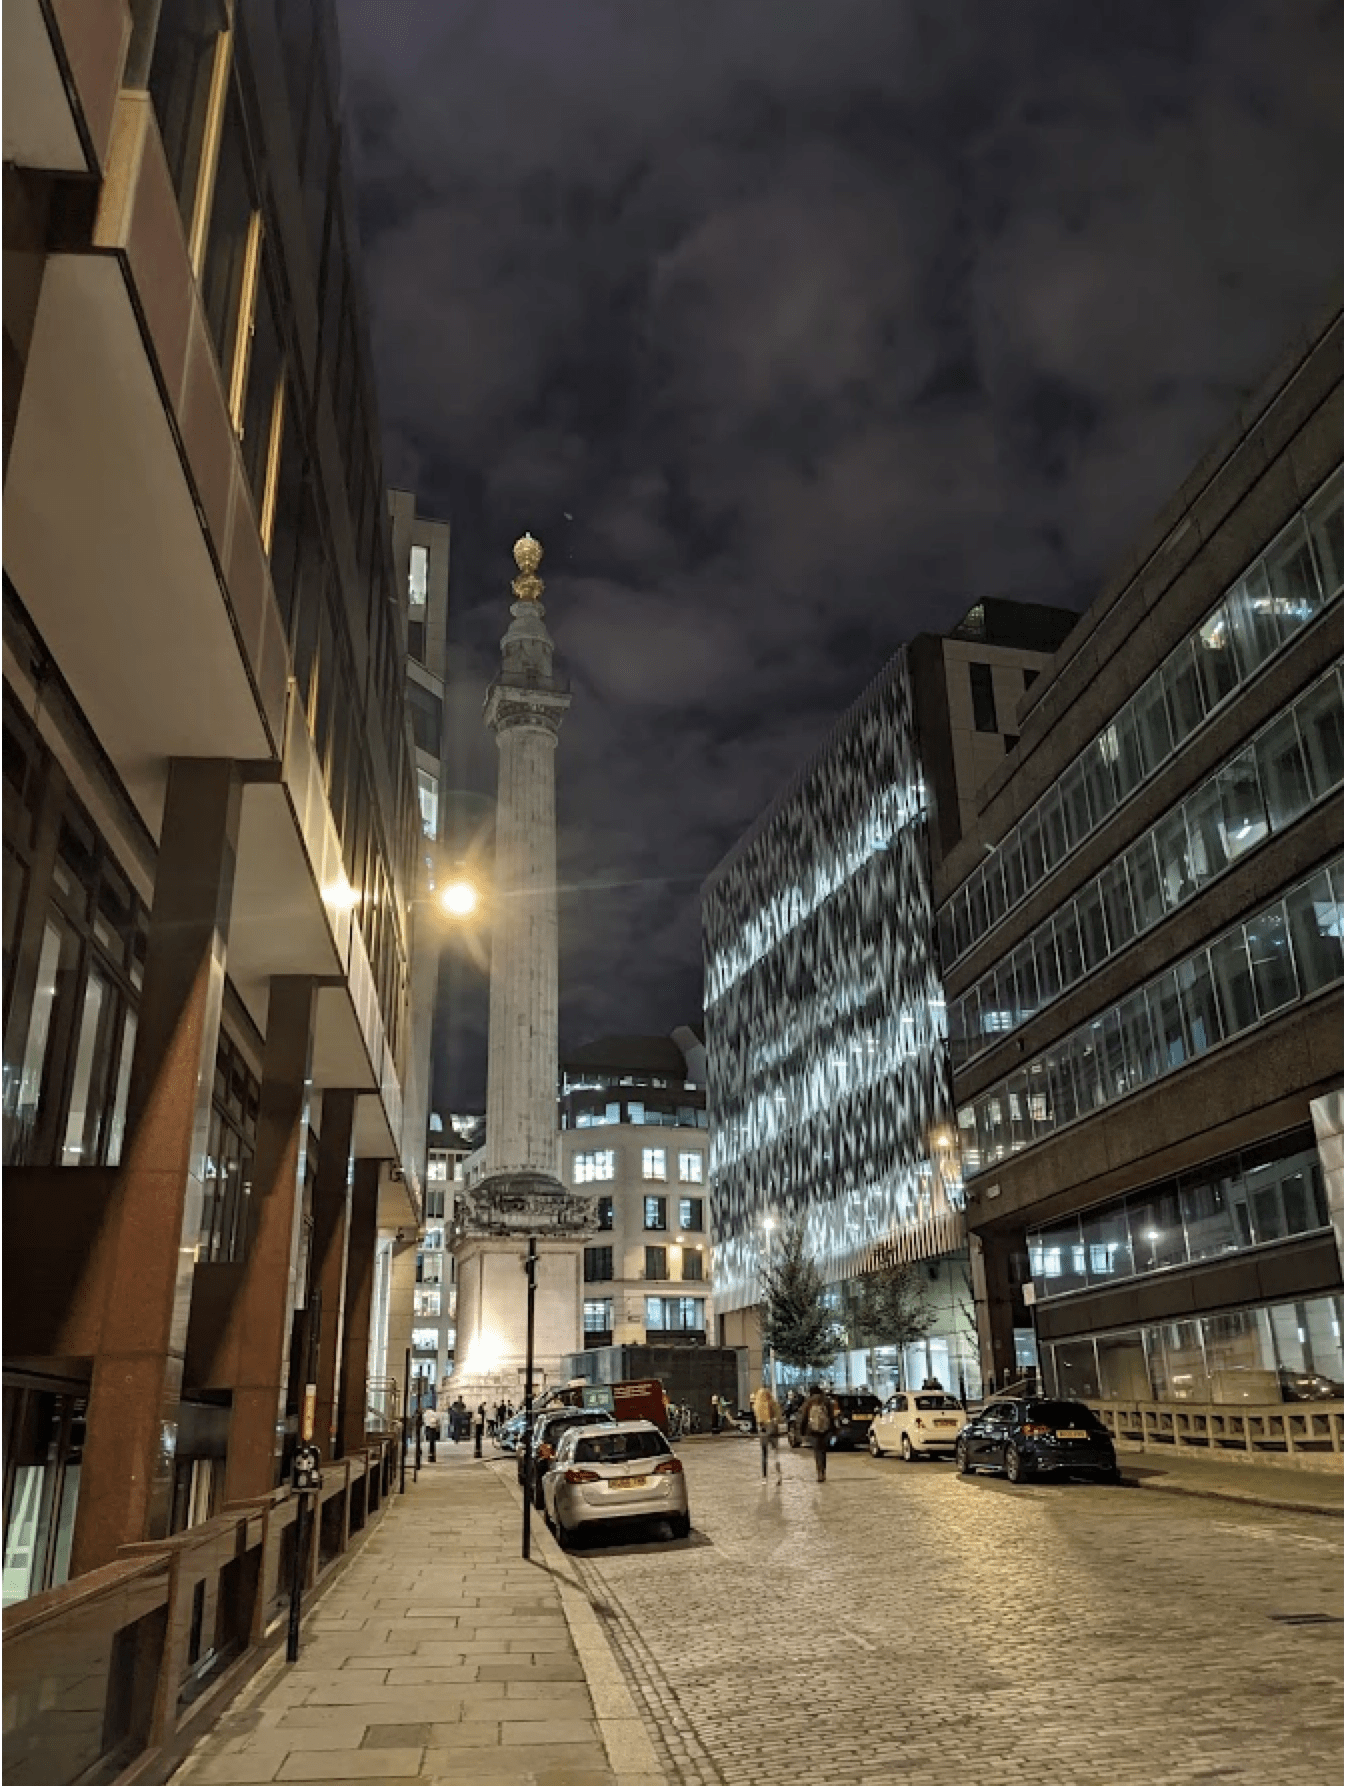 Street scene showing Monument